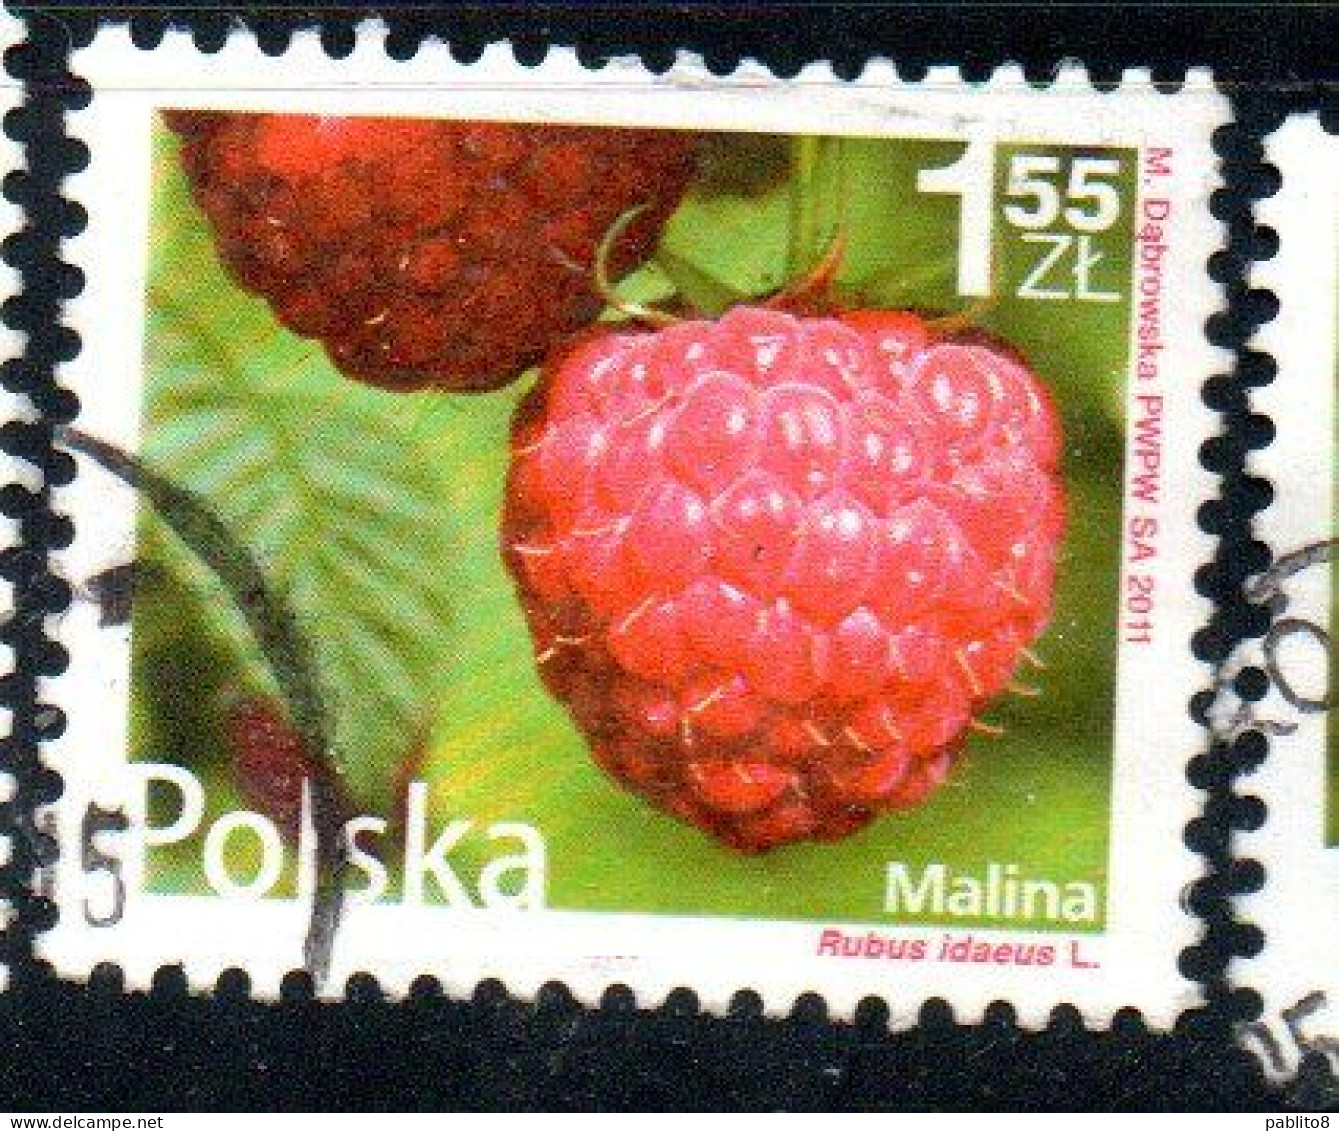 POLONIA POLAND POLSKA 2011 FRUIT AND FLOWERS RUBUS IDAEUS 1.55z USED USATO OBLITERE' - Gebraucht